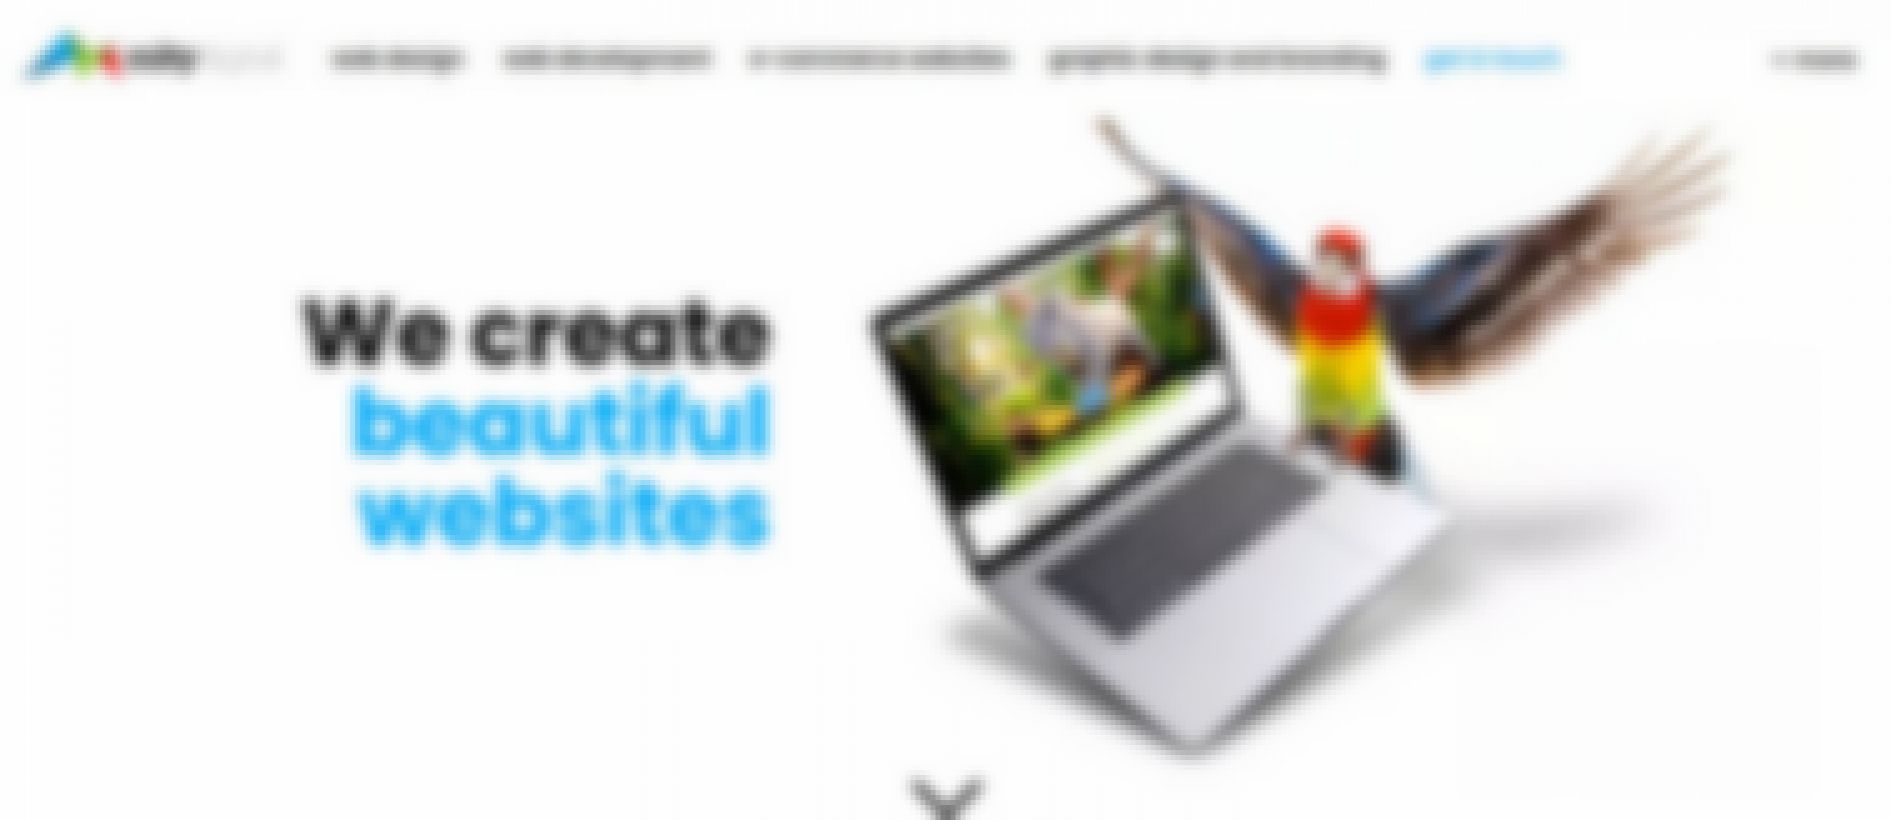 mity digital website designers melbourne